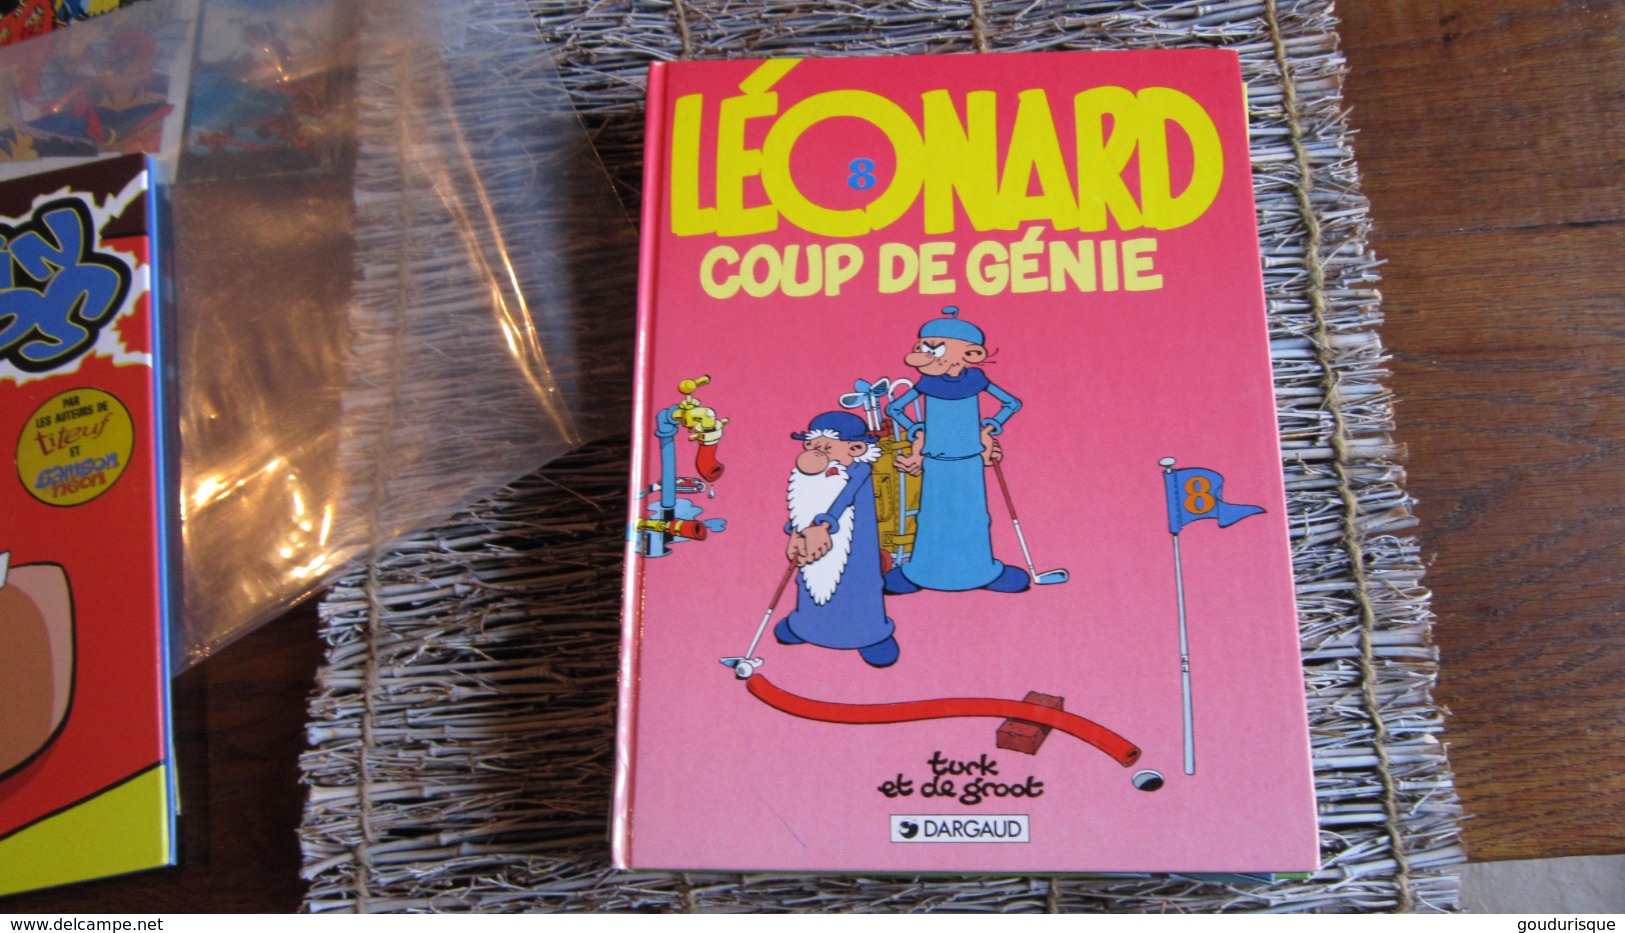 LEONARD T8 COUP DE GENIE  TURK  DE GROOT - Léonard